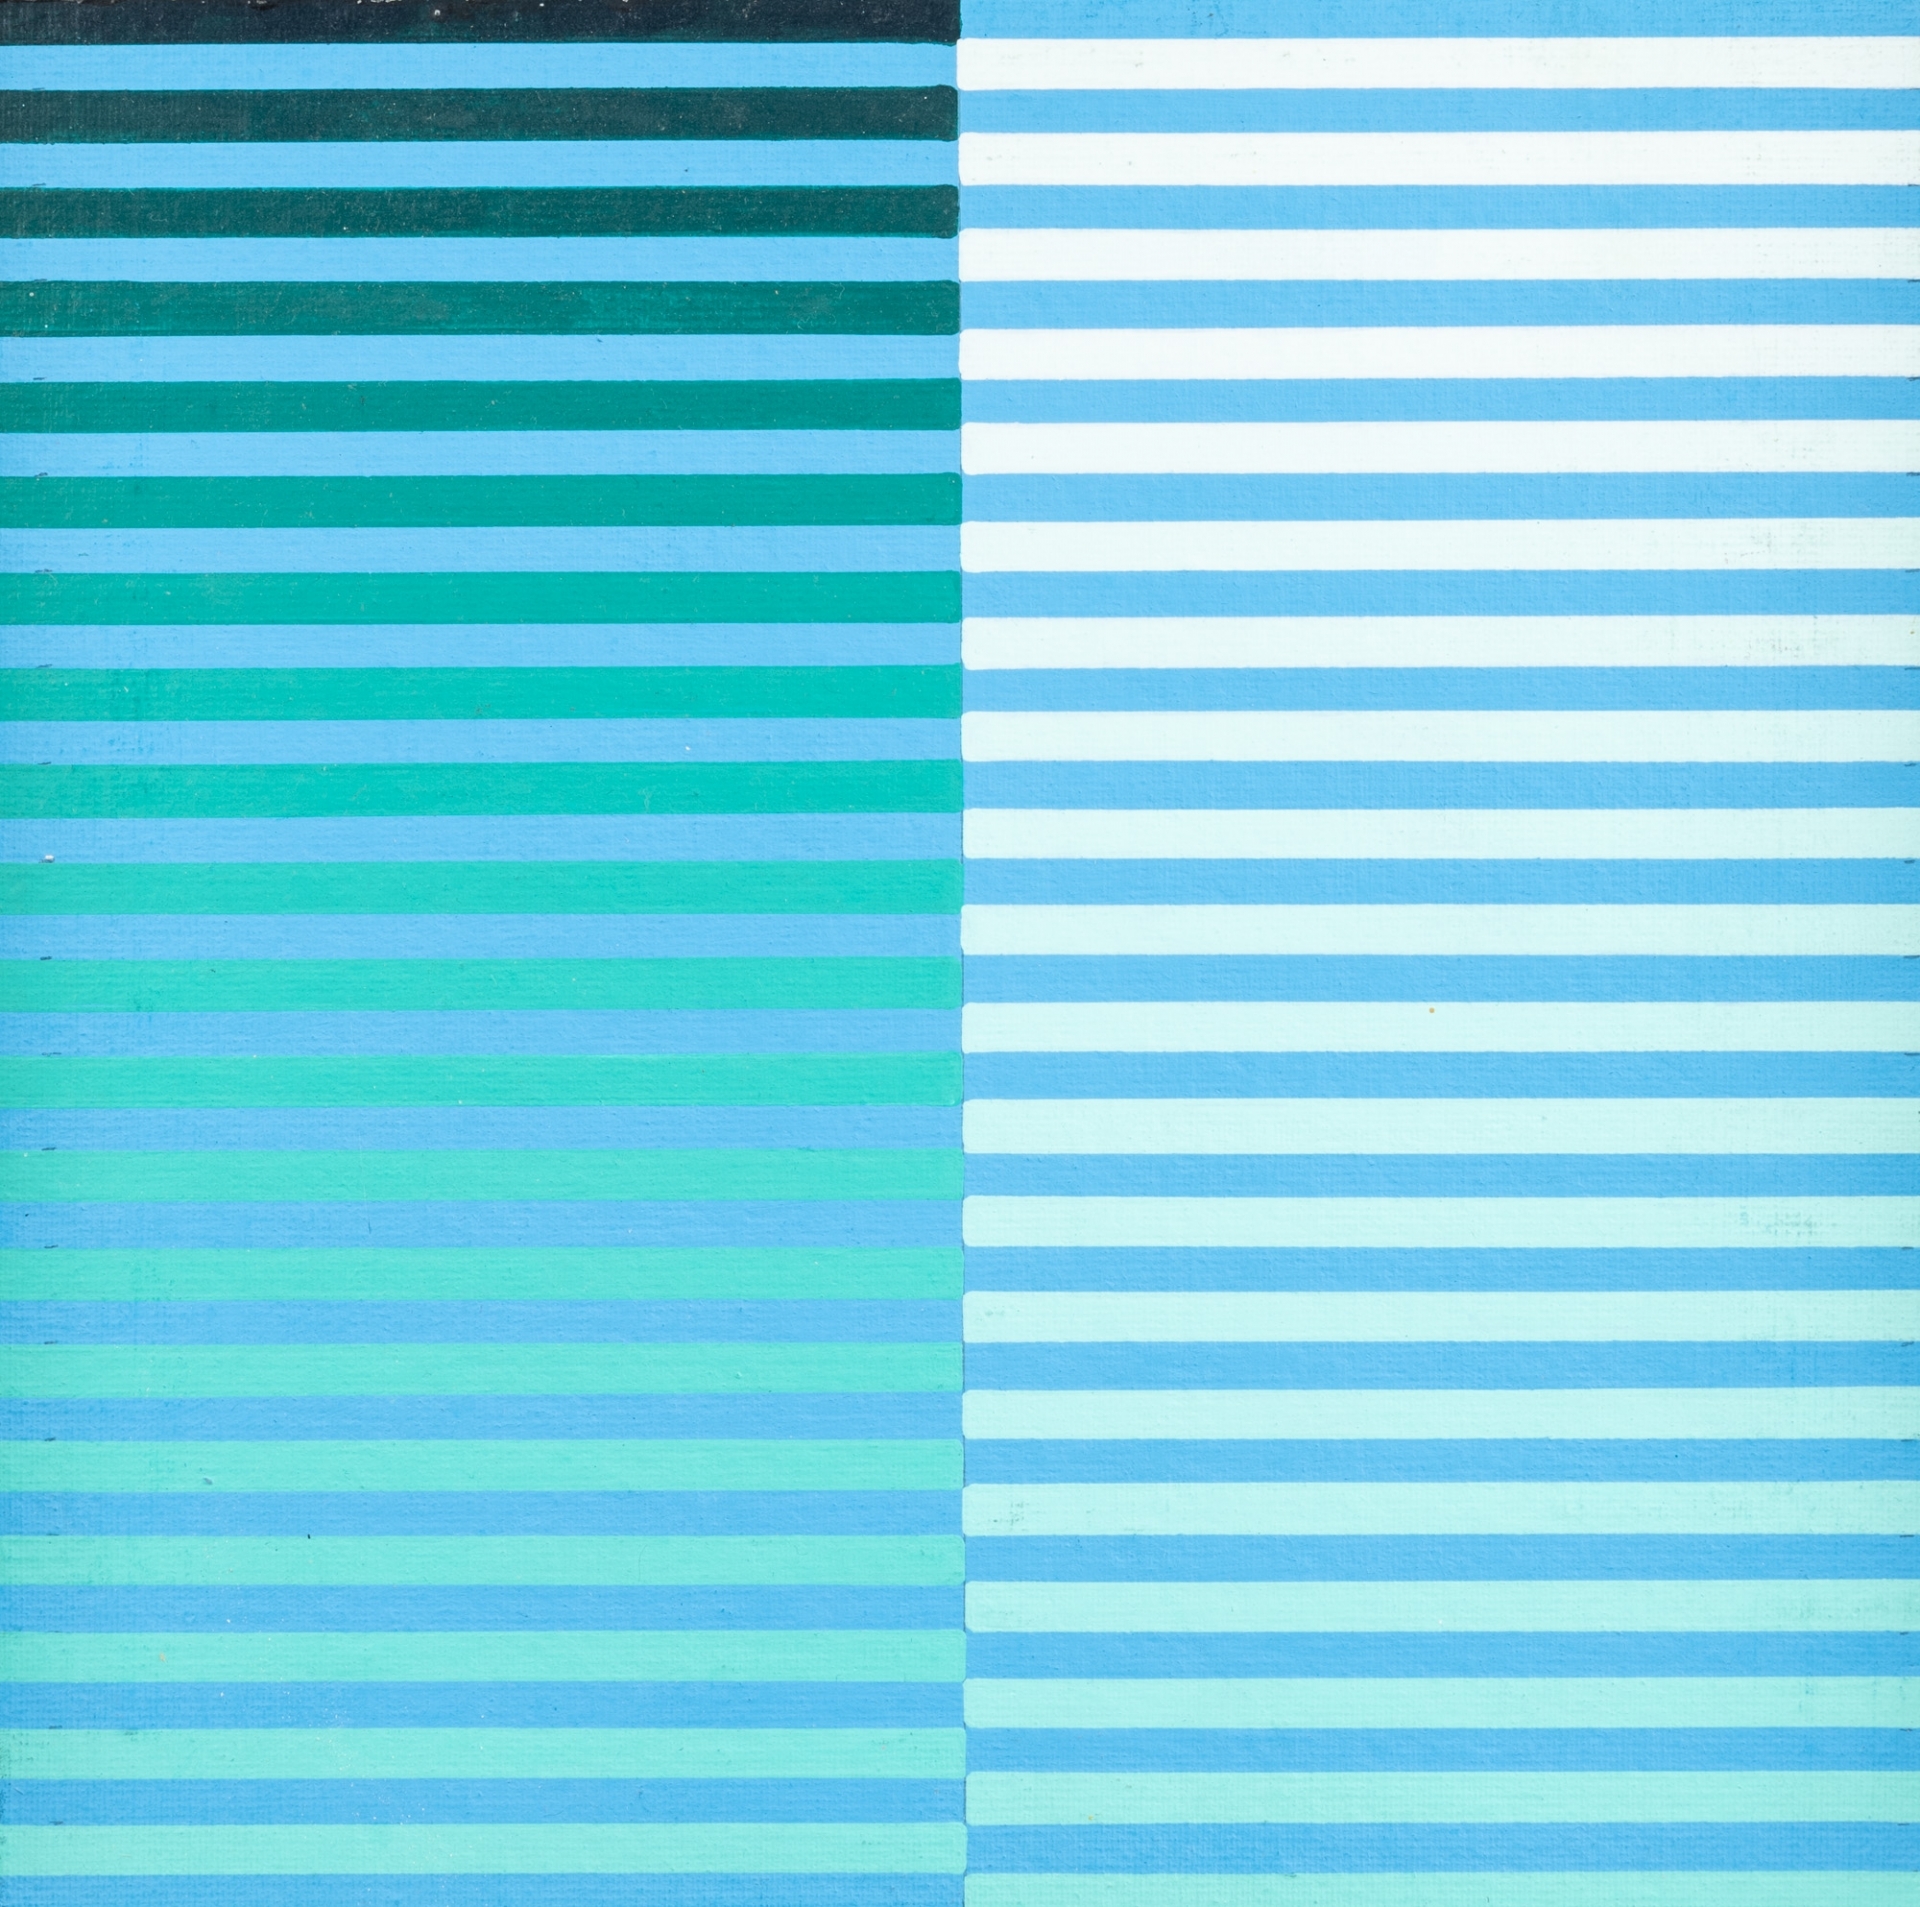 Ricerca del colore verde su celeste by Dadamaino, 1960s - 1970s